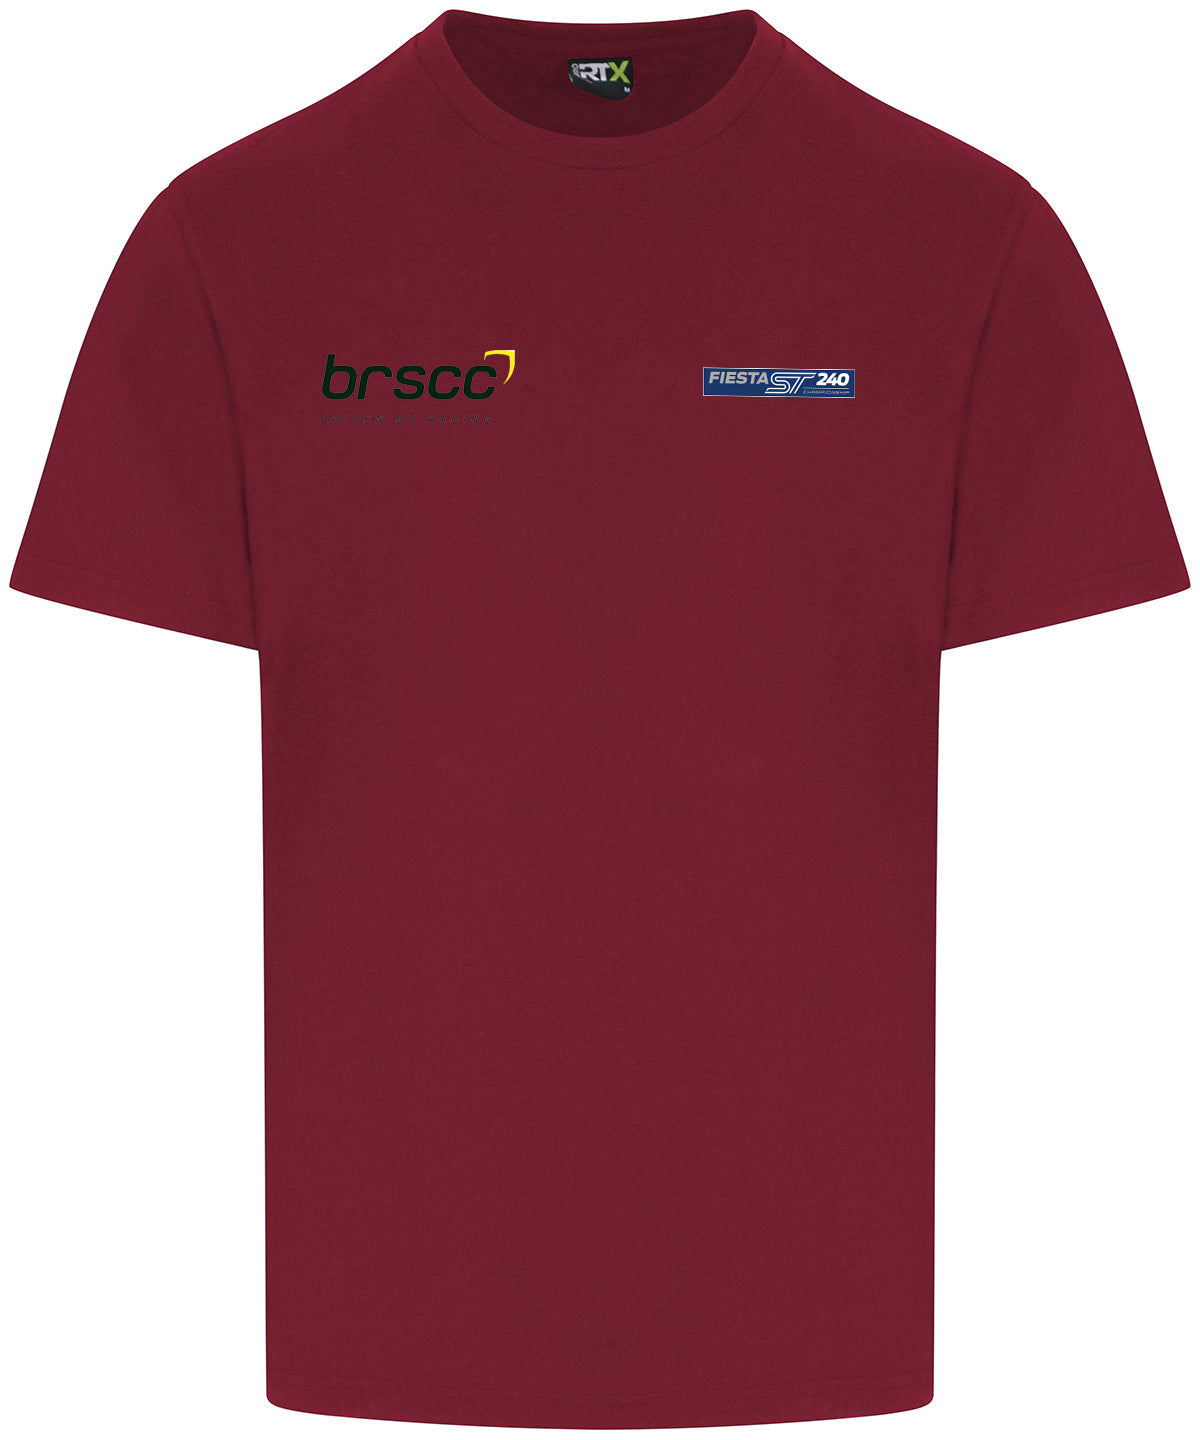 Fiesta ST240 Championship Unisex T-Shirt